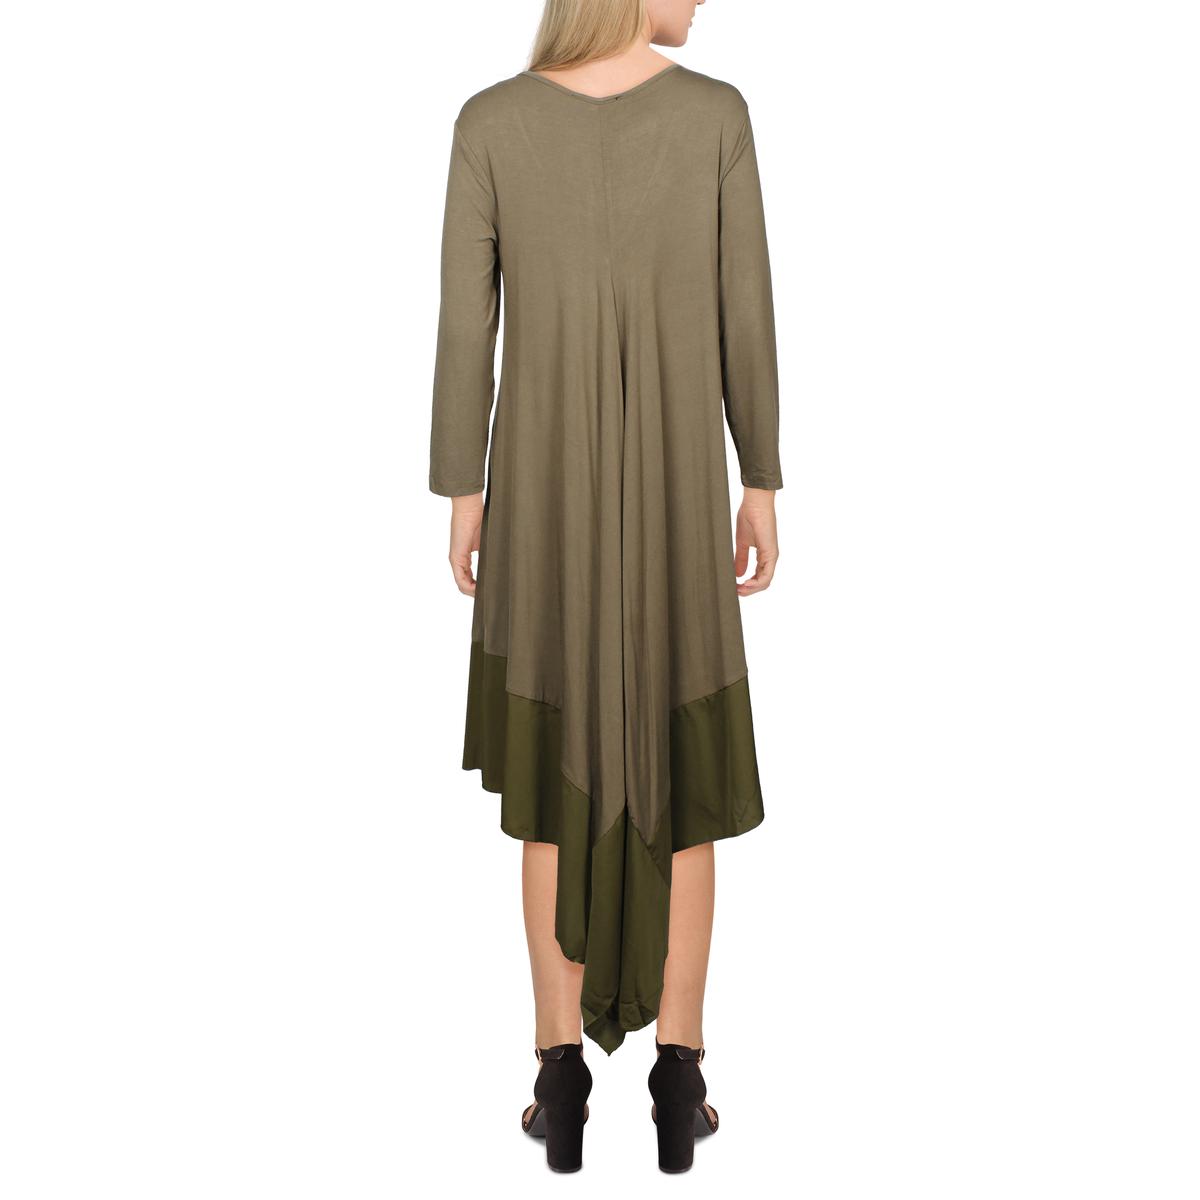 Gracia Womens Knit Maxi Daytime T-Shirt Dress BHFO 3575 | eBay